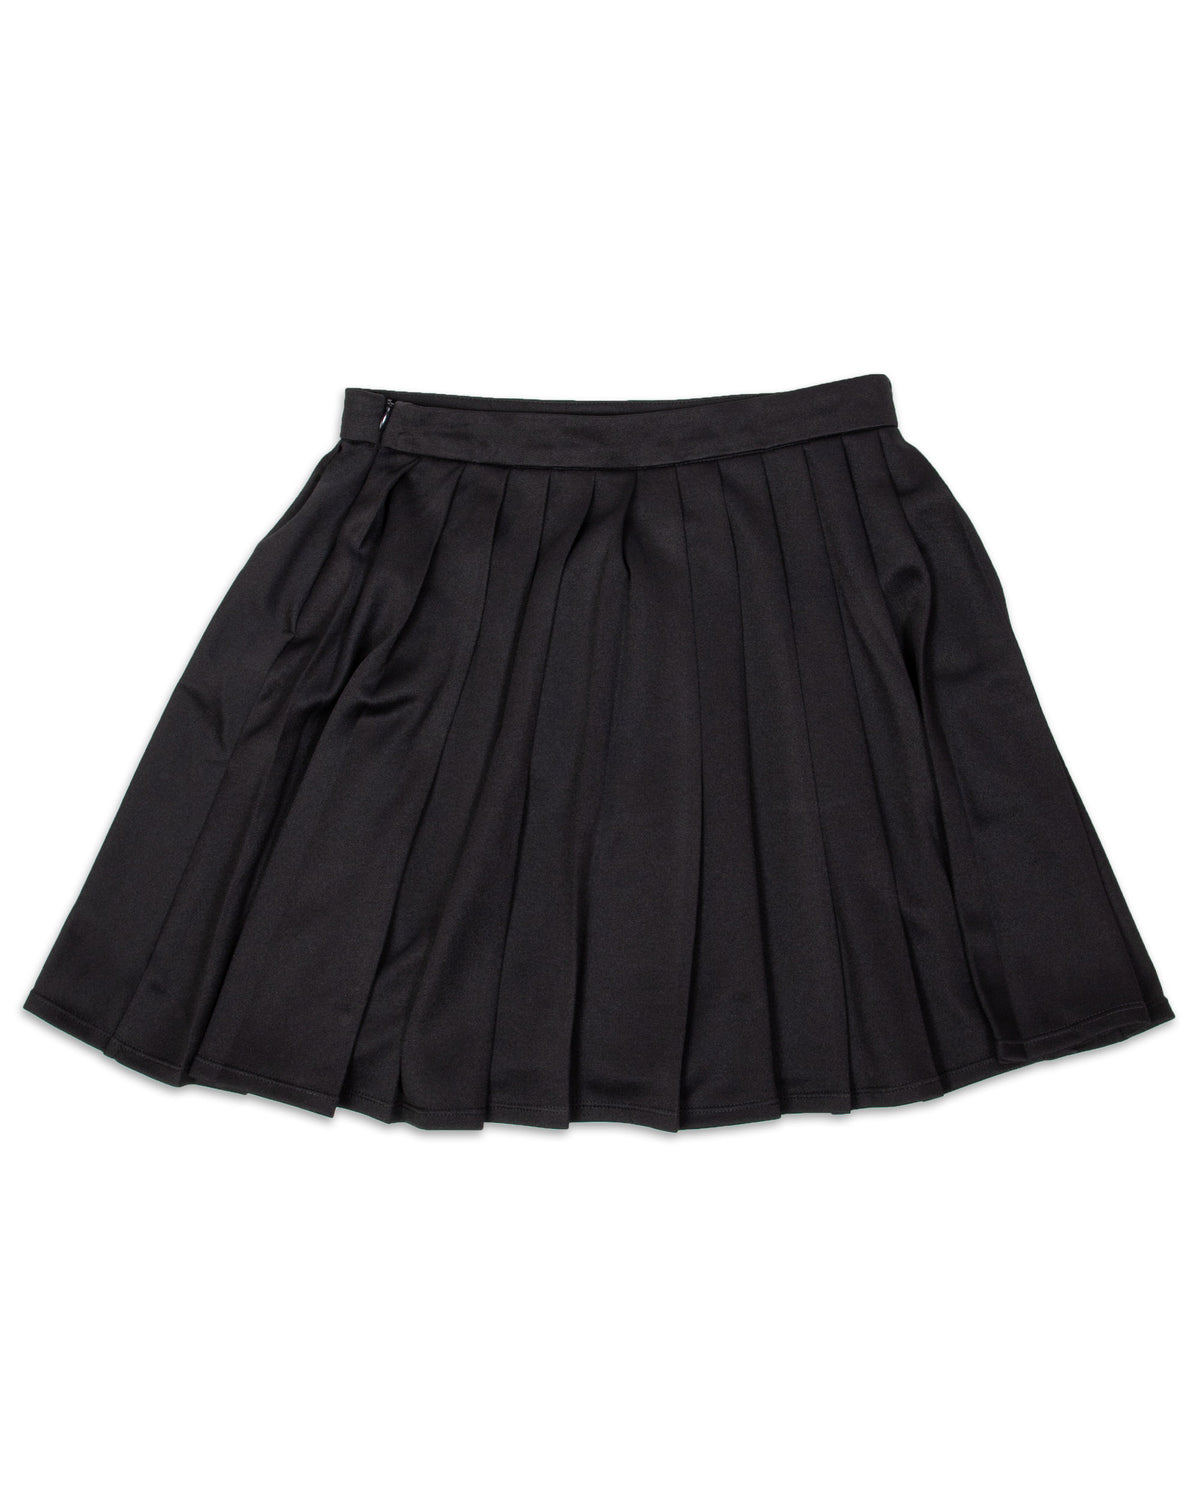 Adidas Skirt Black